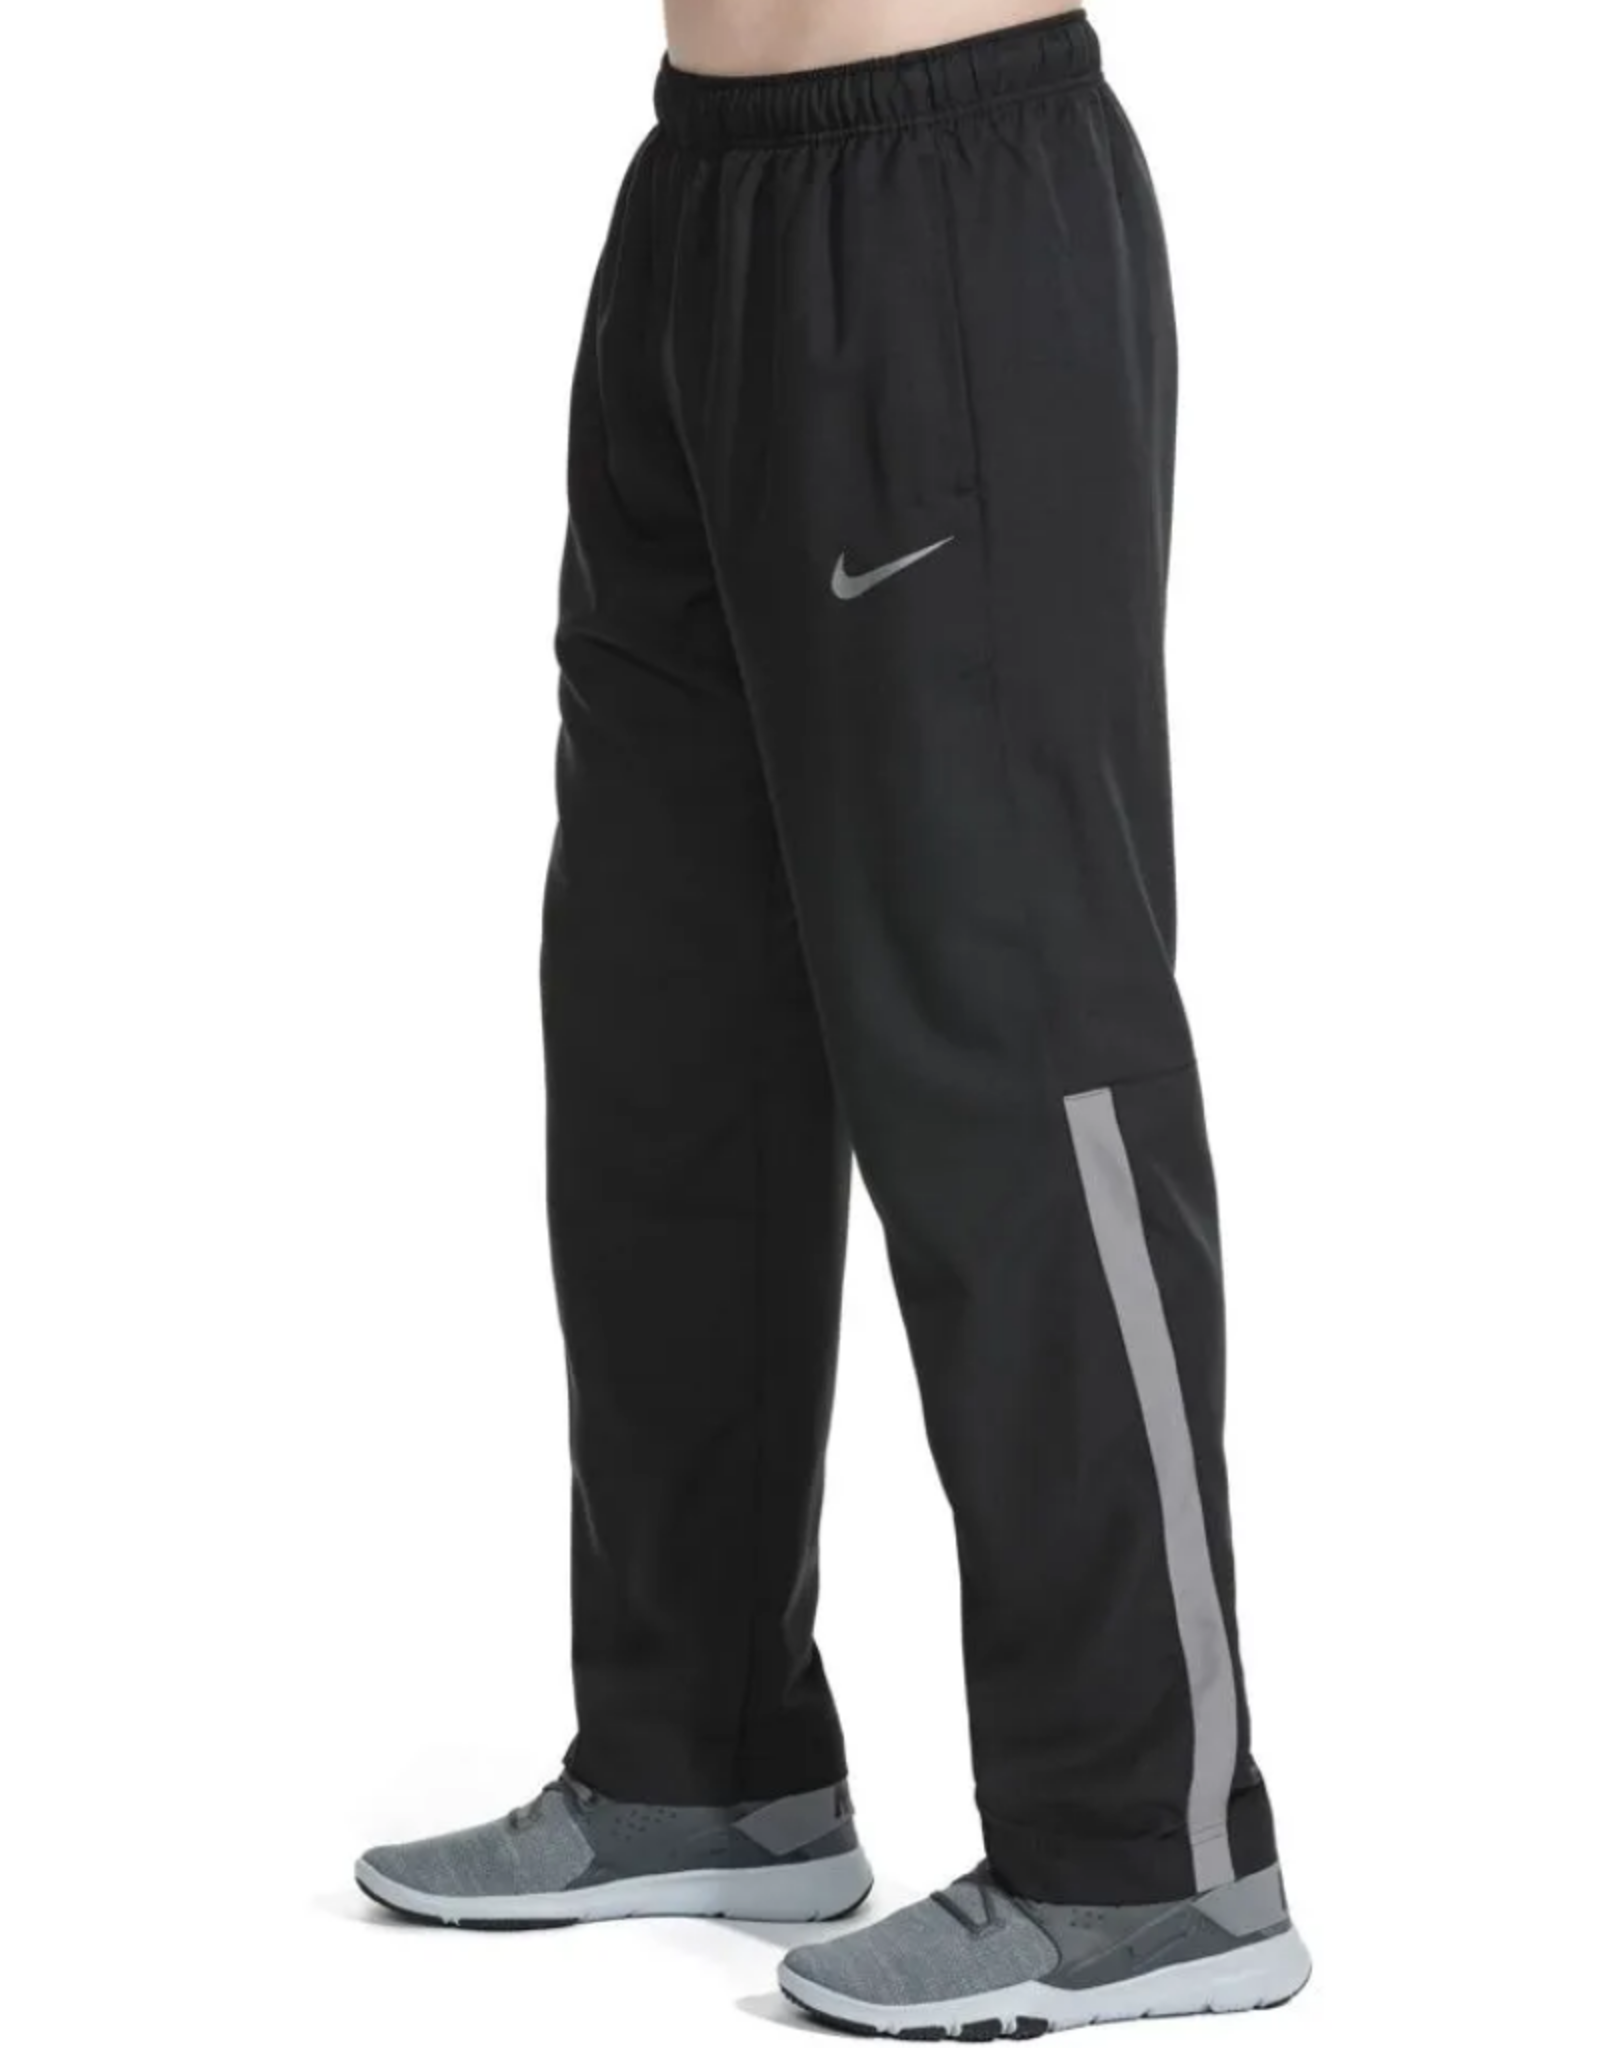 Nike Dry Men's Team Woven Pants Black - THAT PRO LOOK